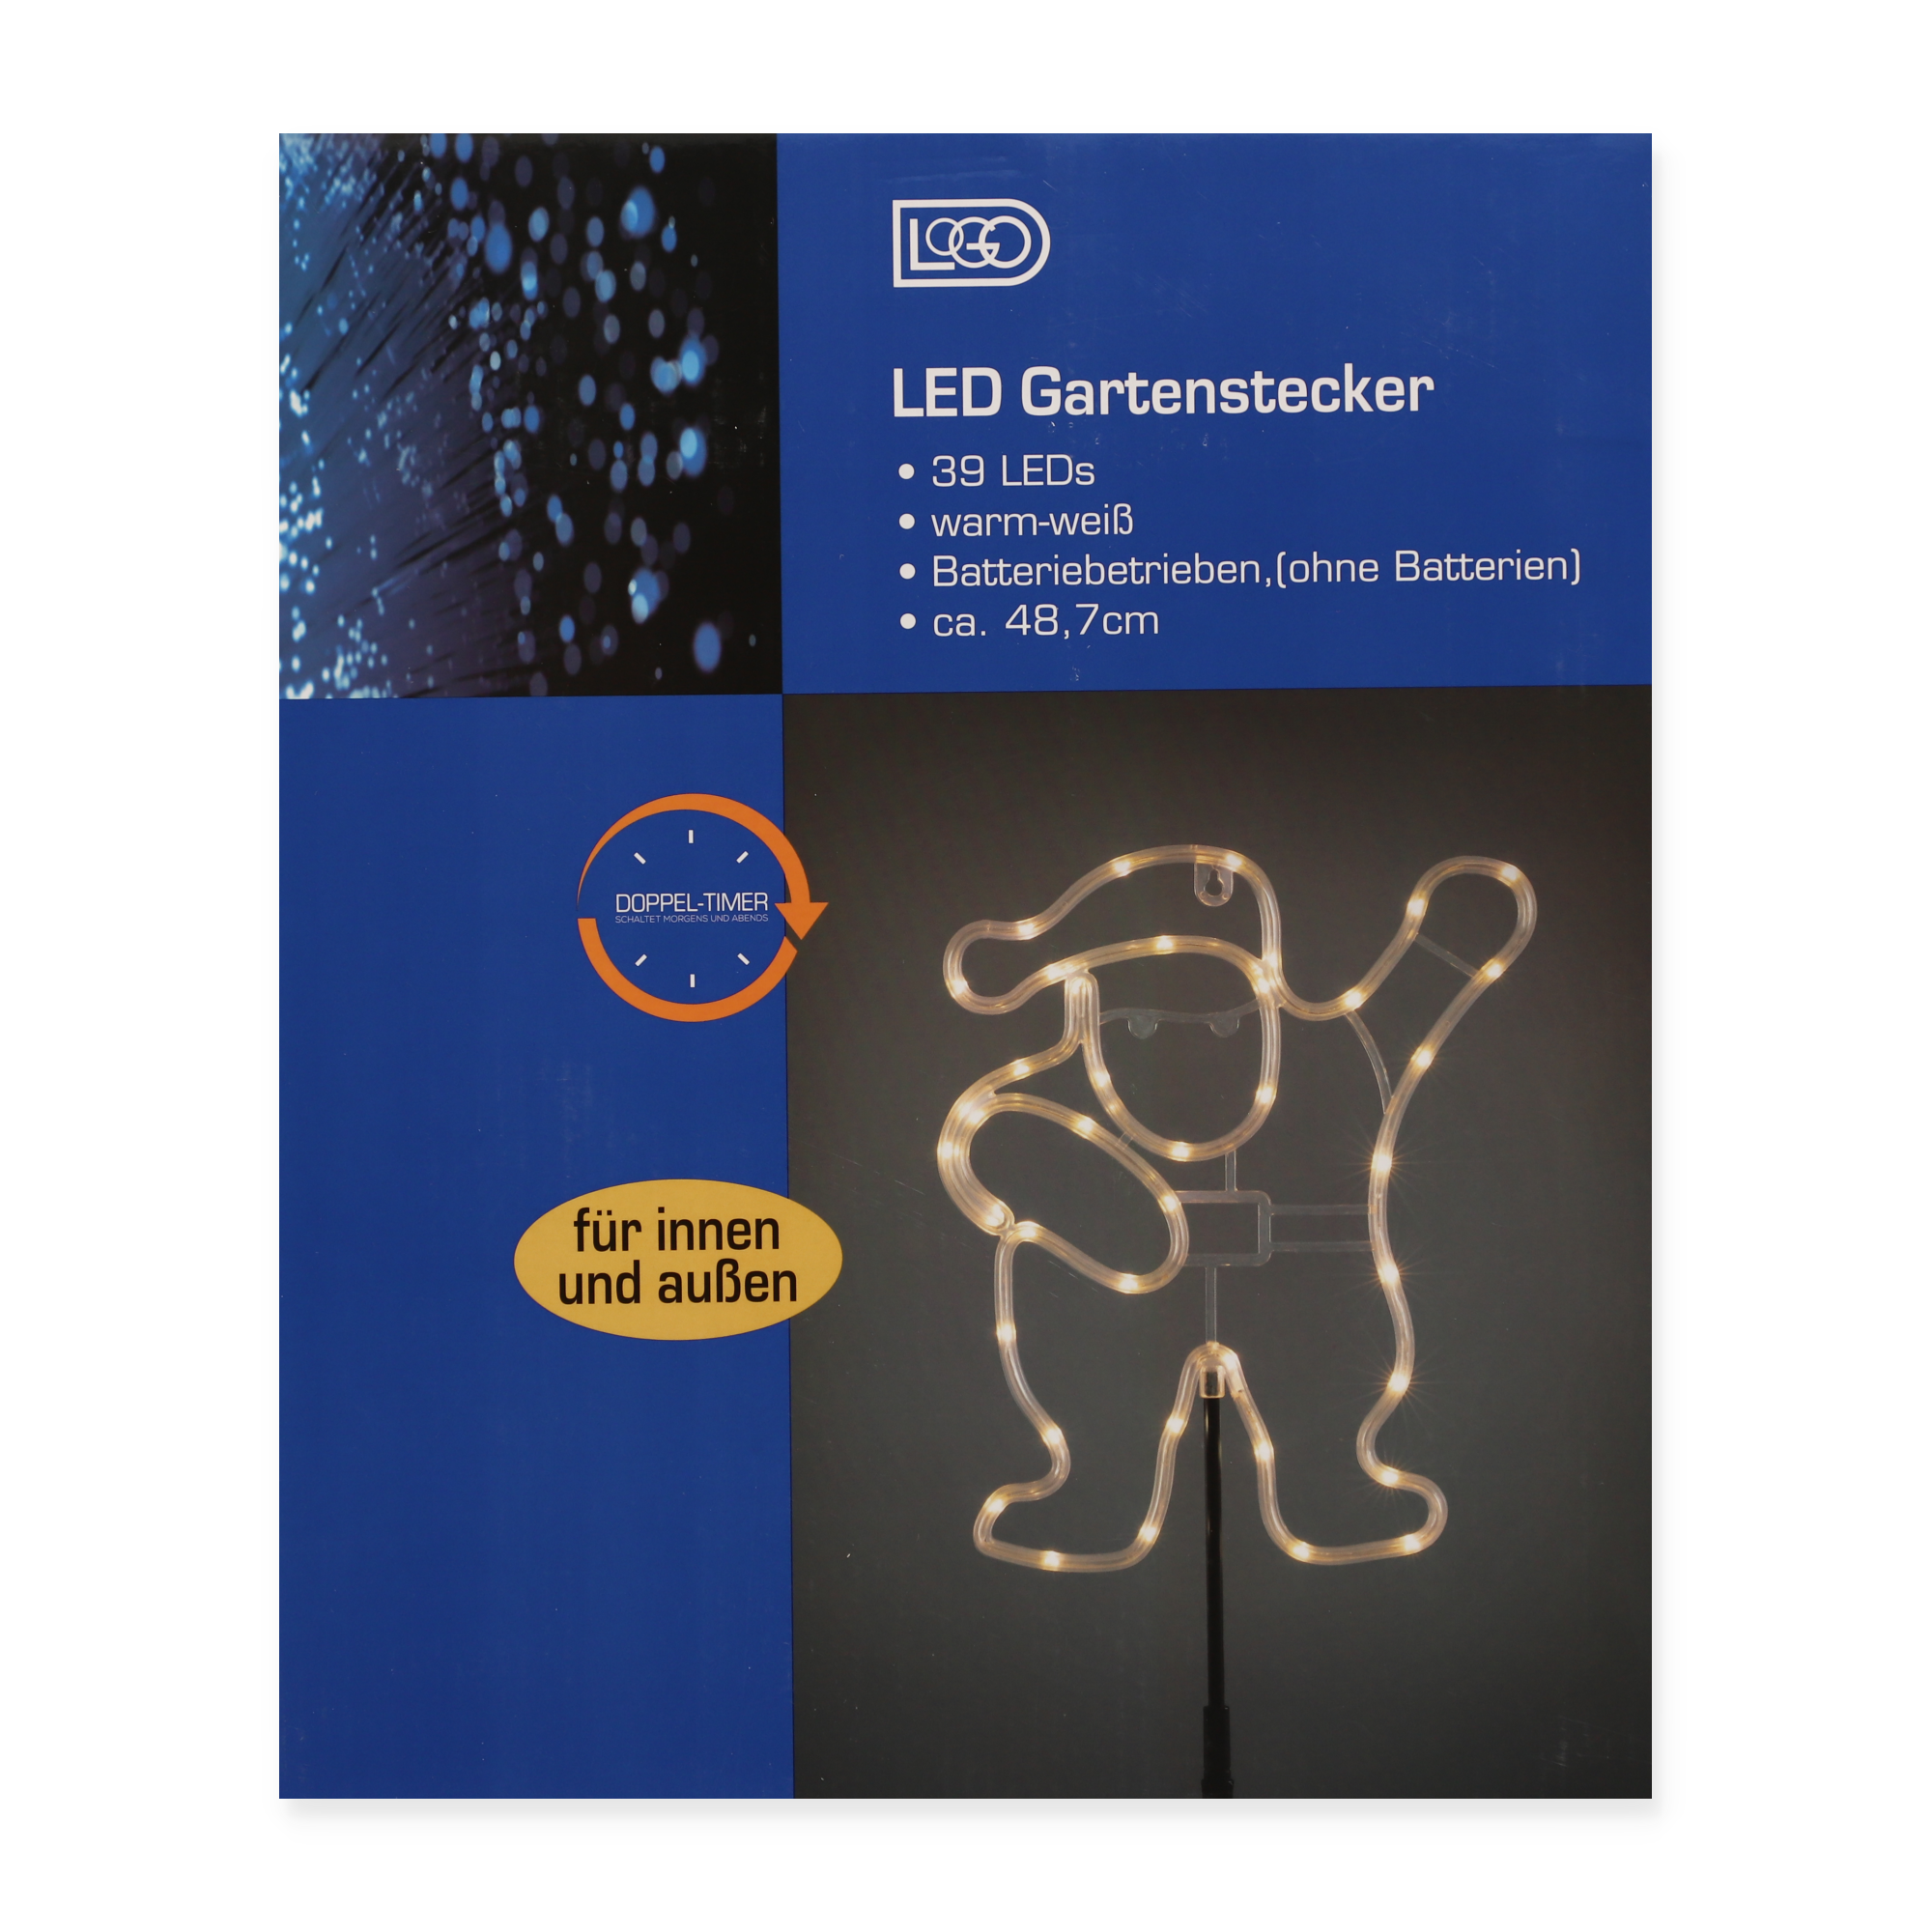 LED-Gartenstecker 'Santa' 39 LEDs warmweiß 26 x 48,7 cm + product picture